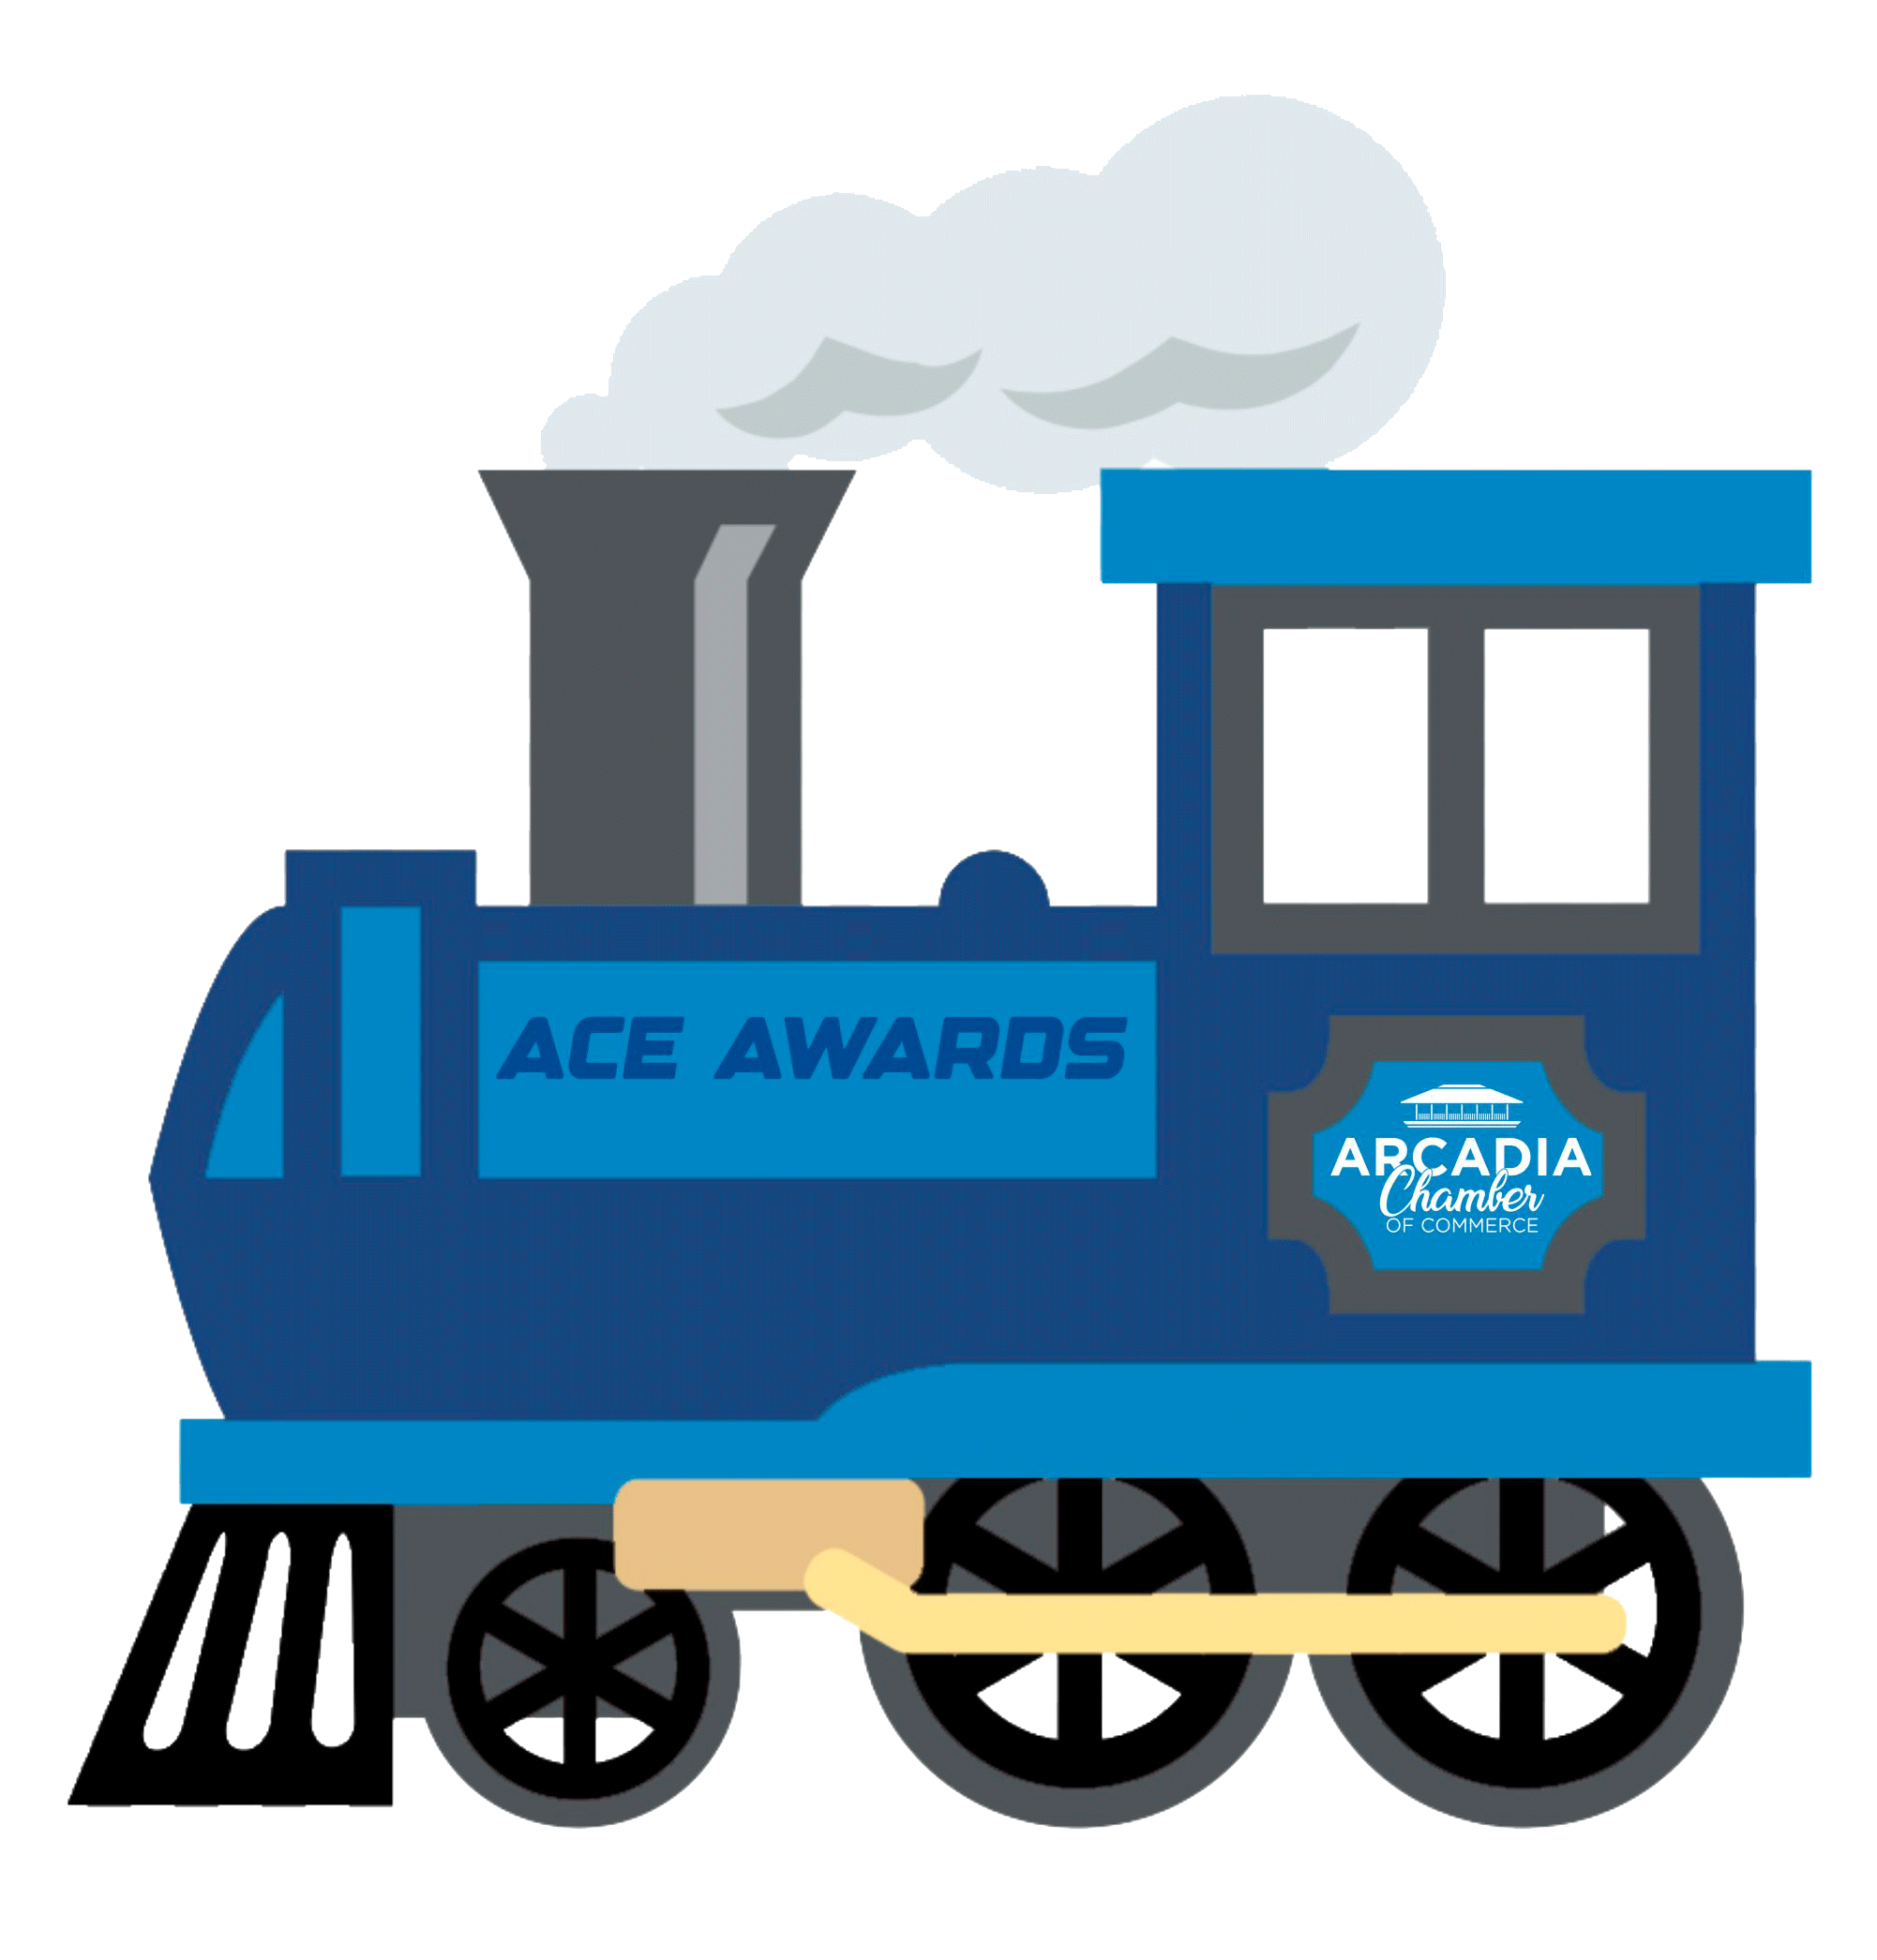 train engine cartoon